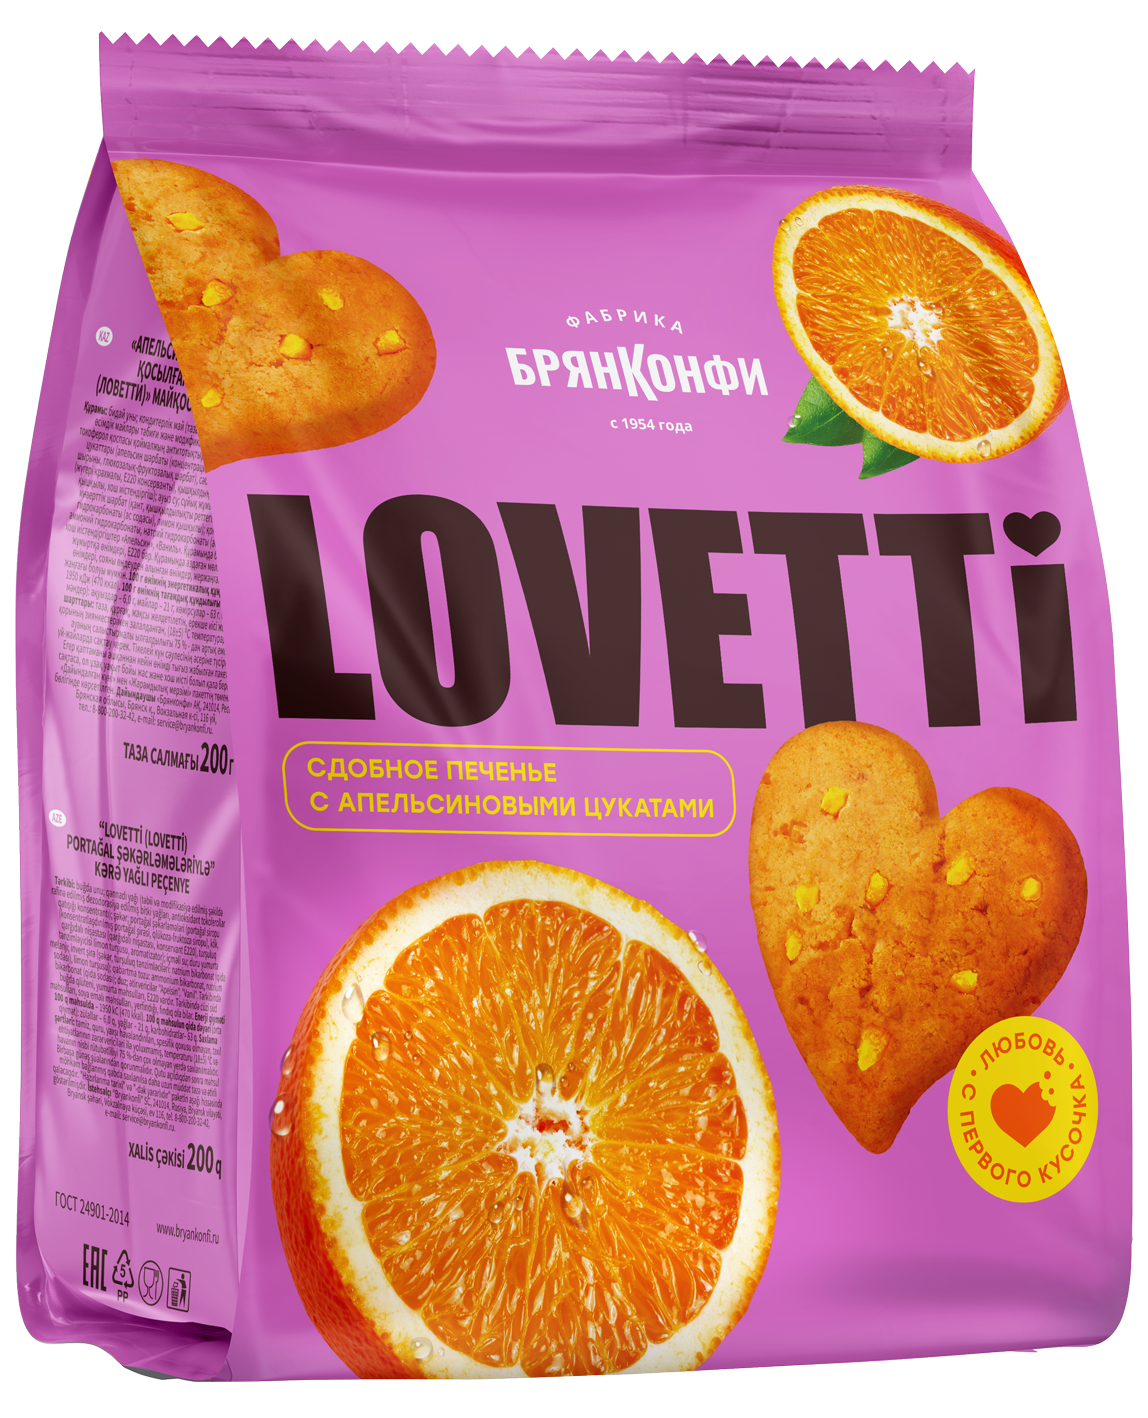 Печенье "Lovetti" с апельсиновыми цукатами 200г/Брянконфи